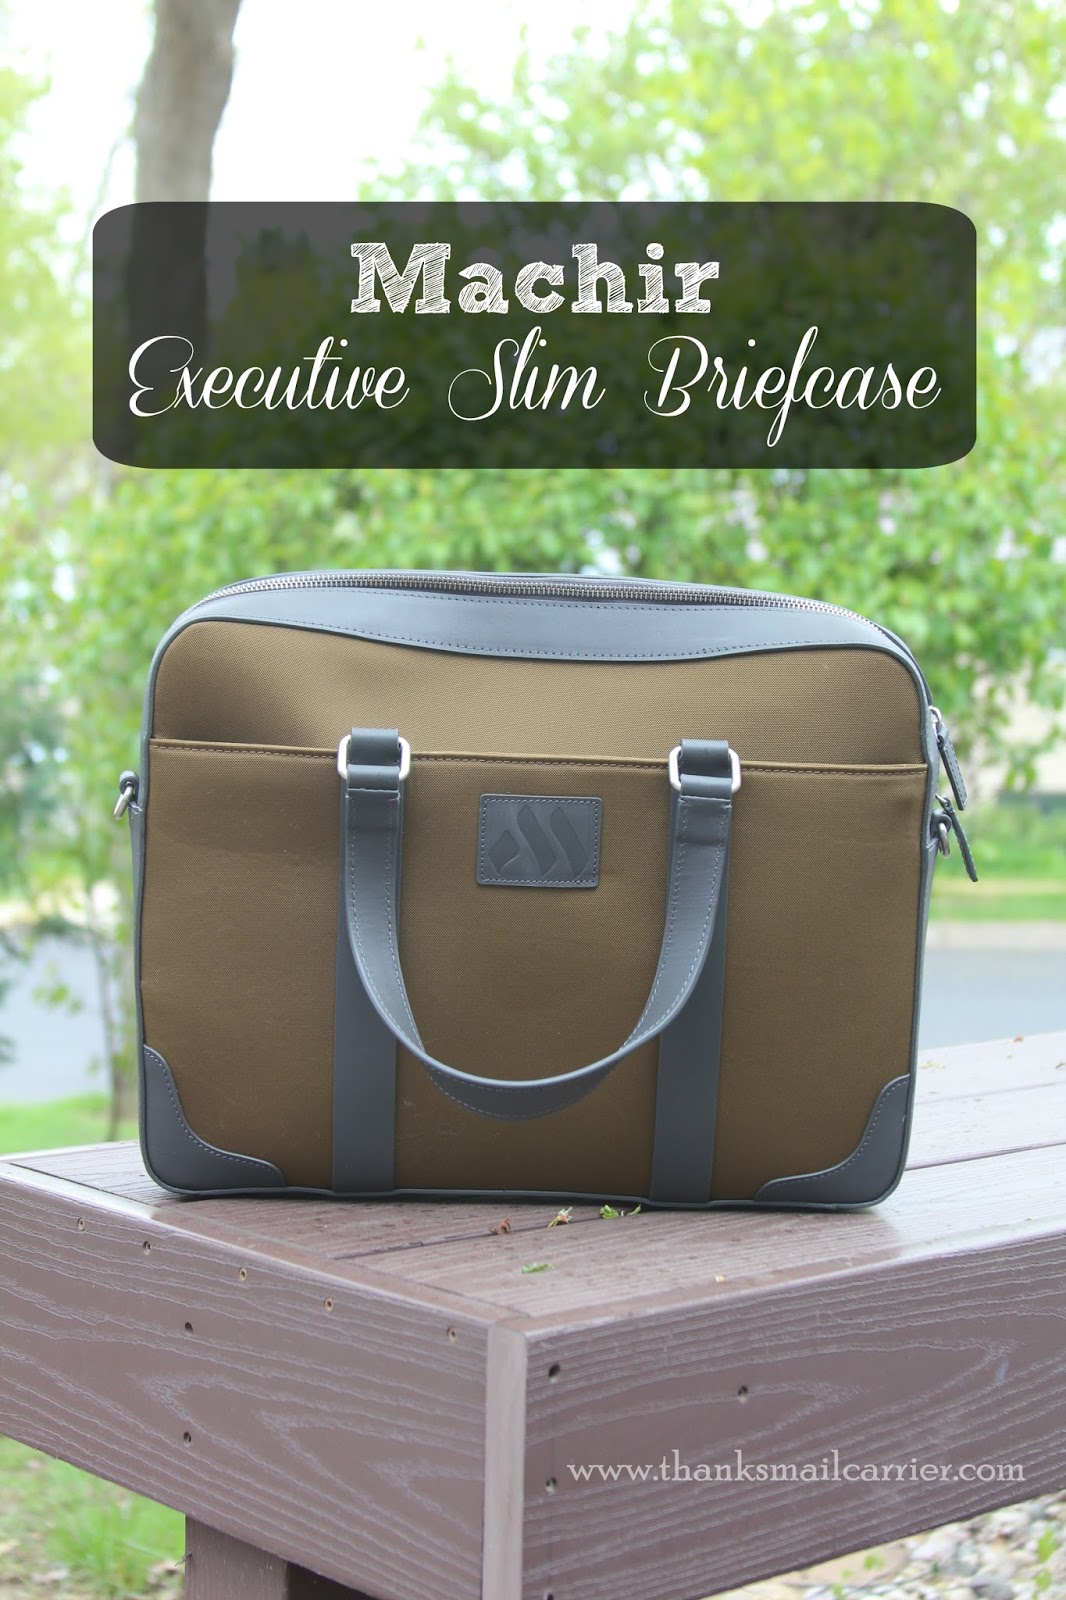 Machir Executive Slim Briefcase